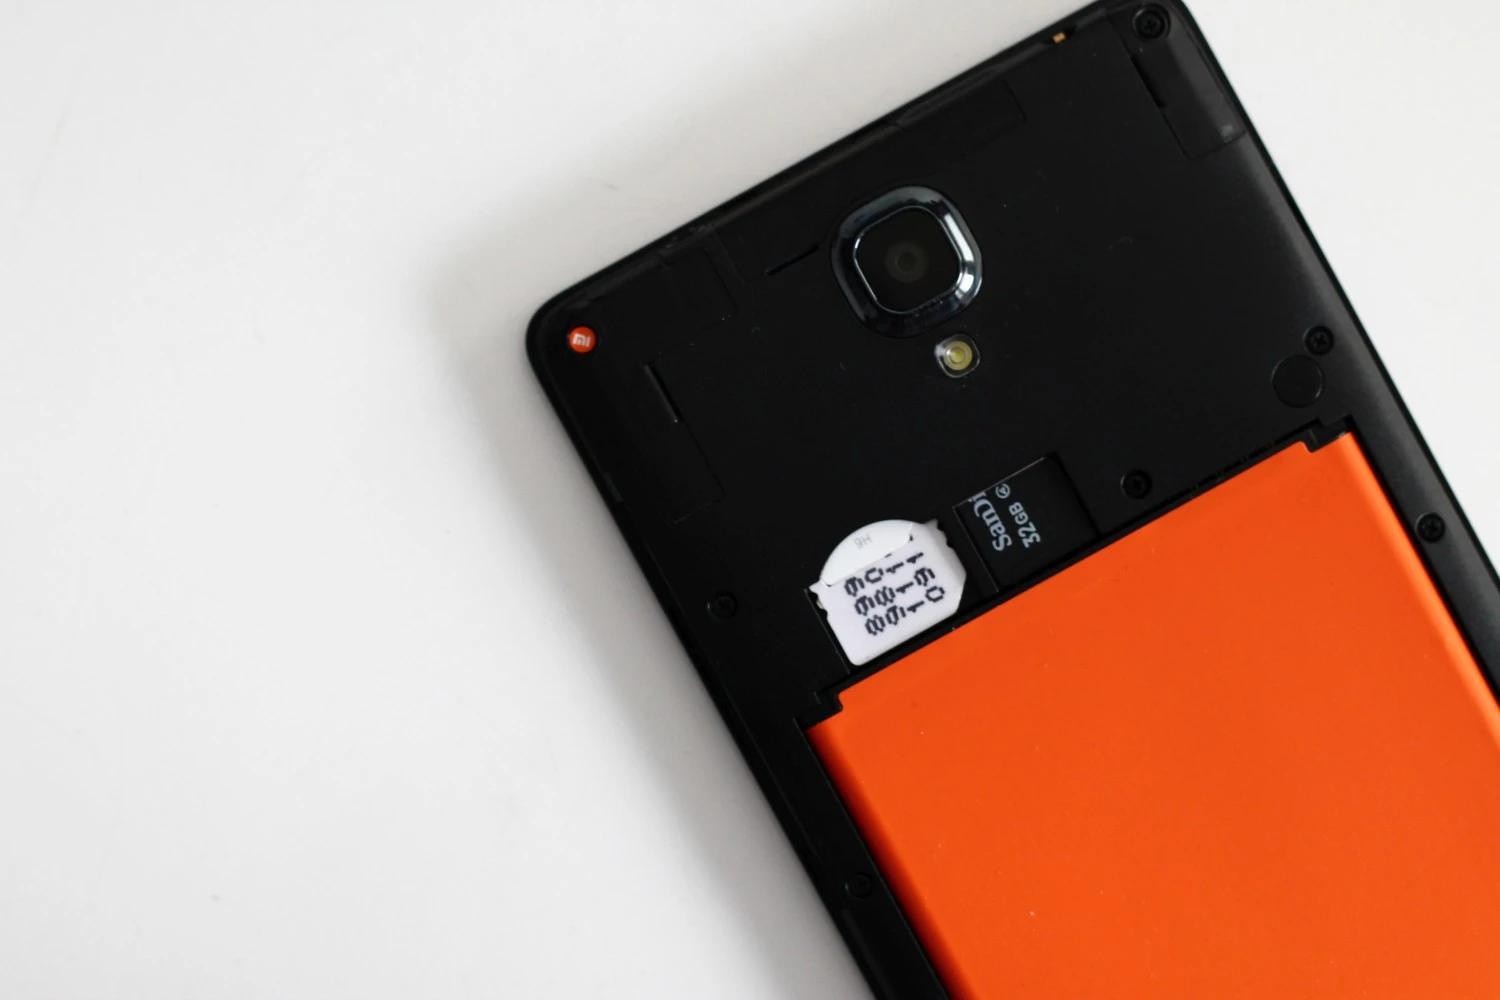 Redmi Note 4G: Choosing The Right SIM Card